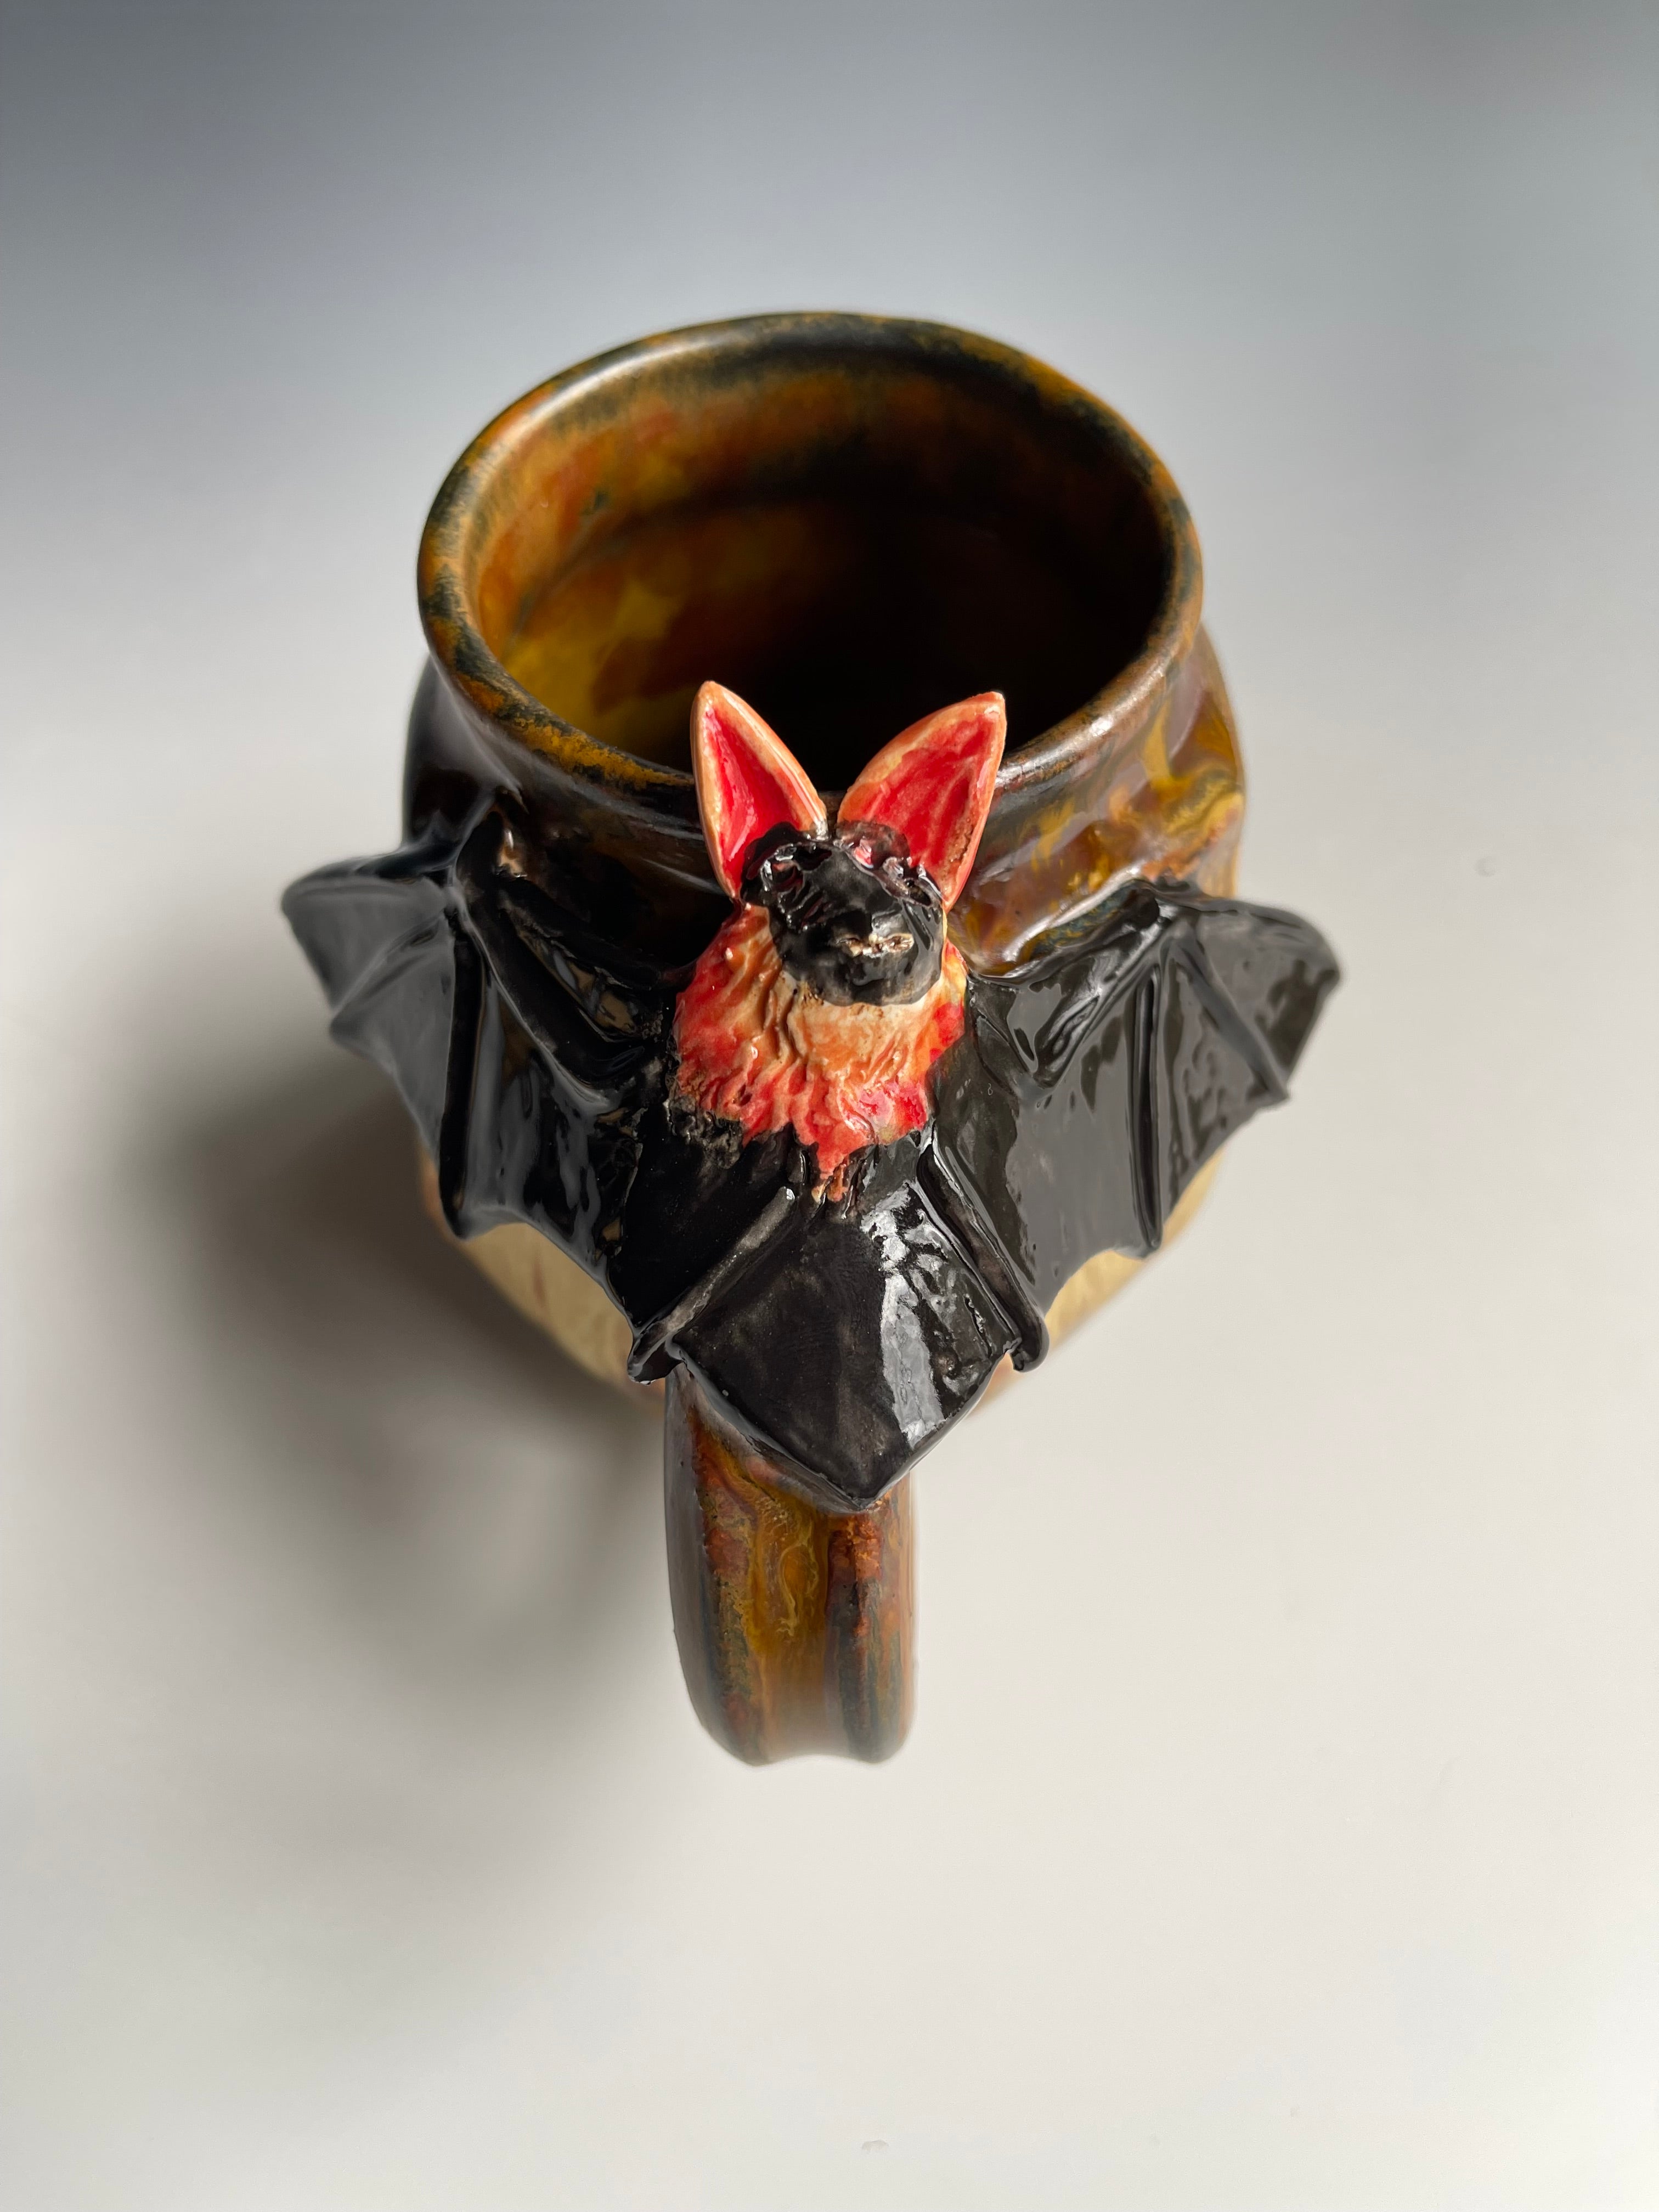 Ceramic bat sculpture mug